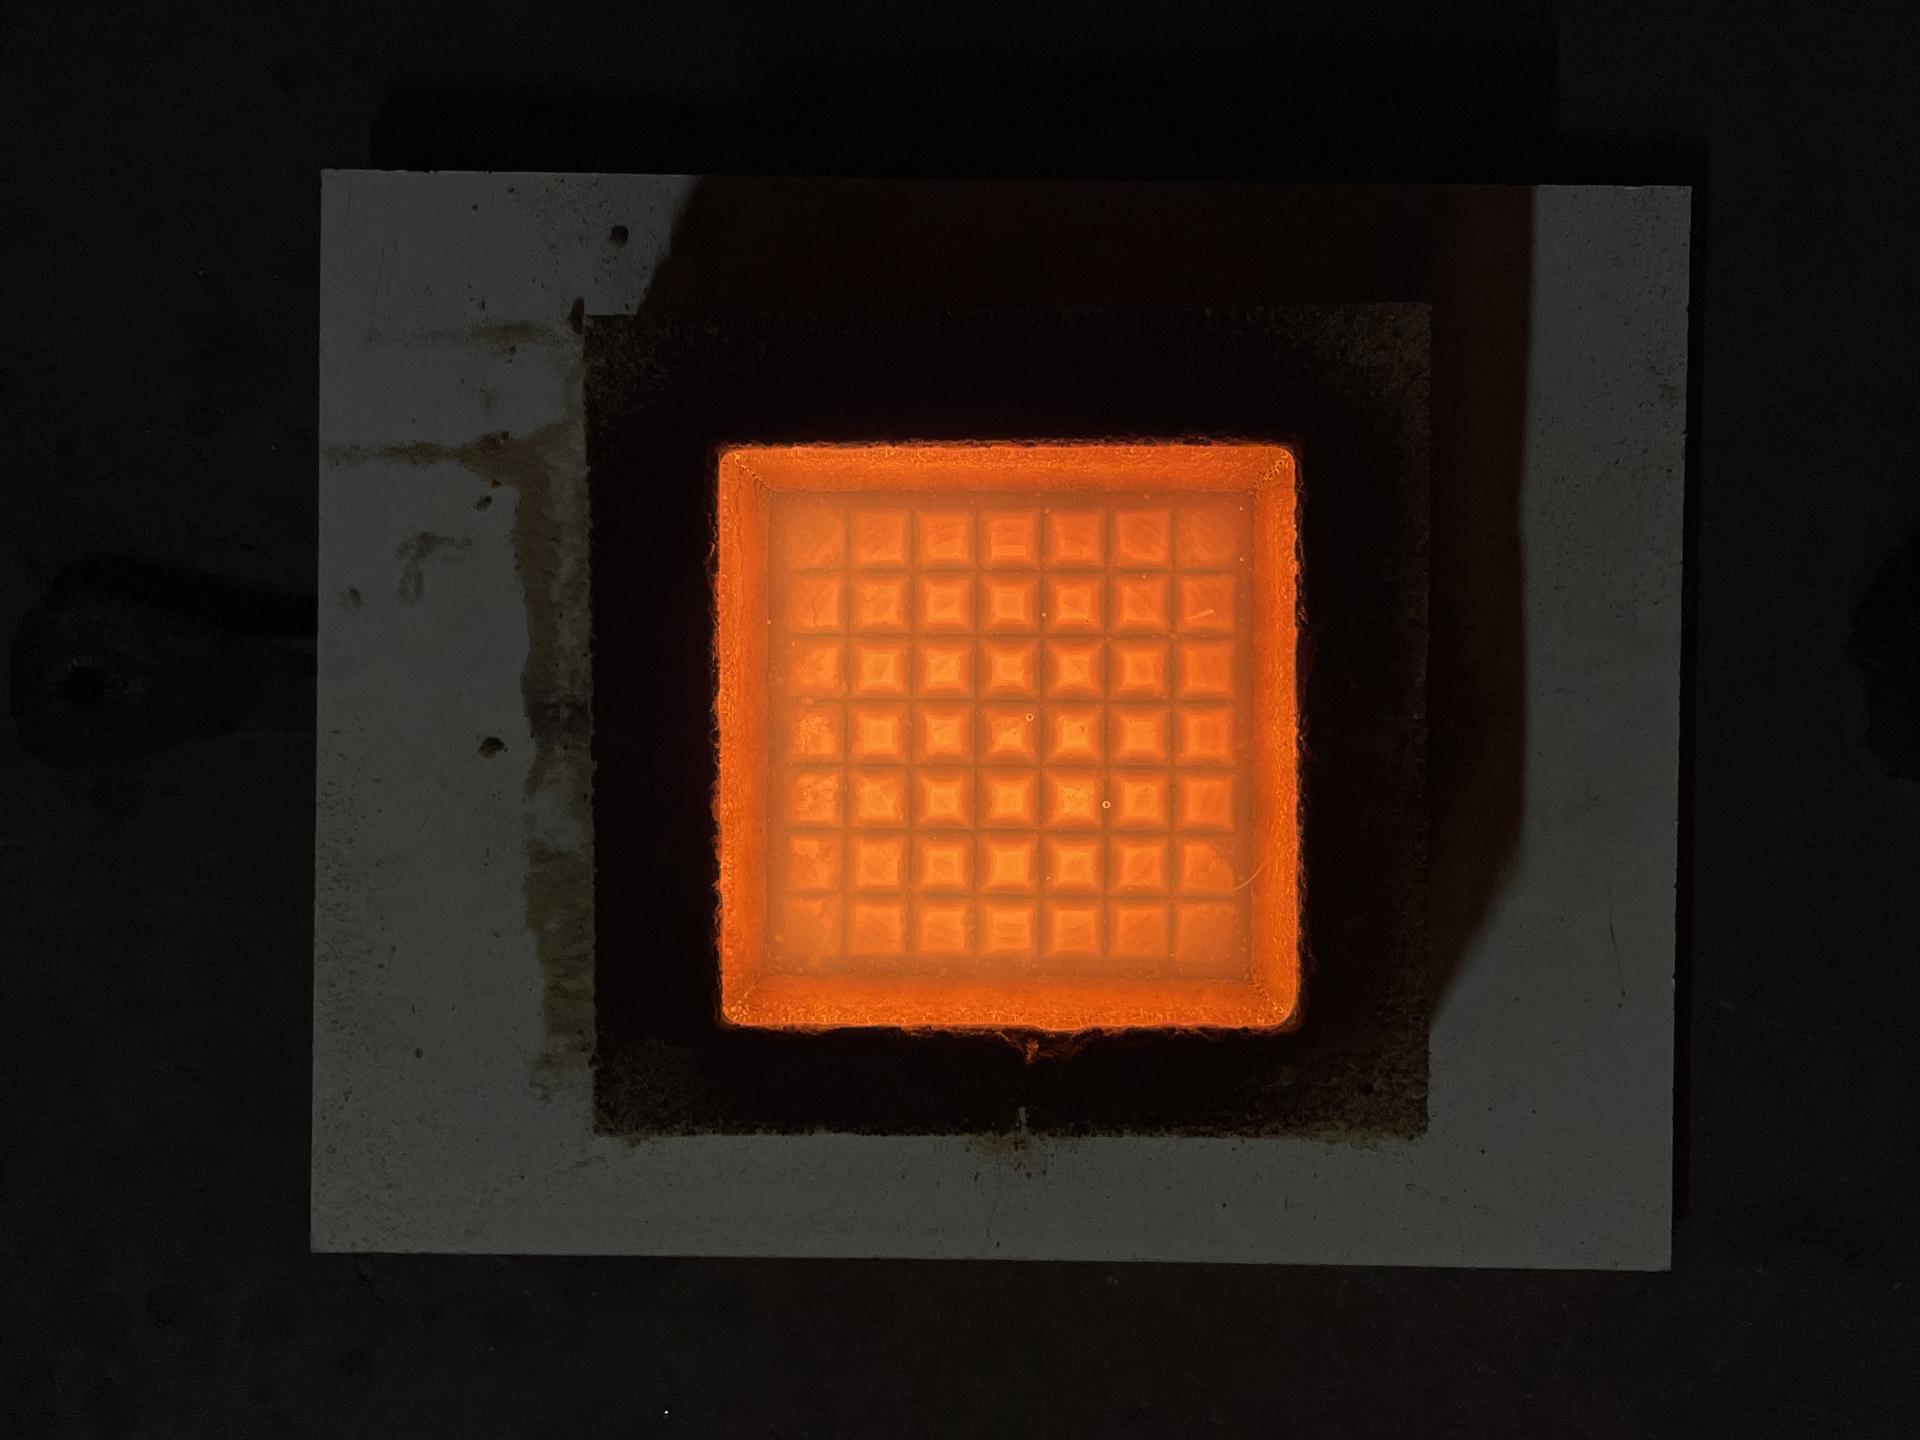 Molten glass poured into an optical grid mold.